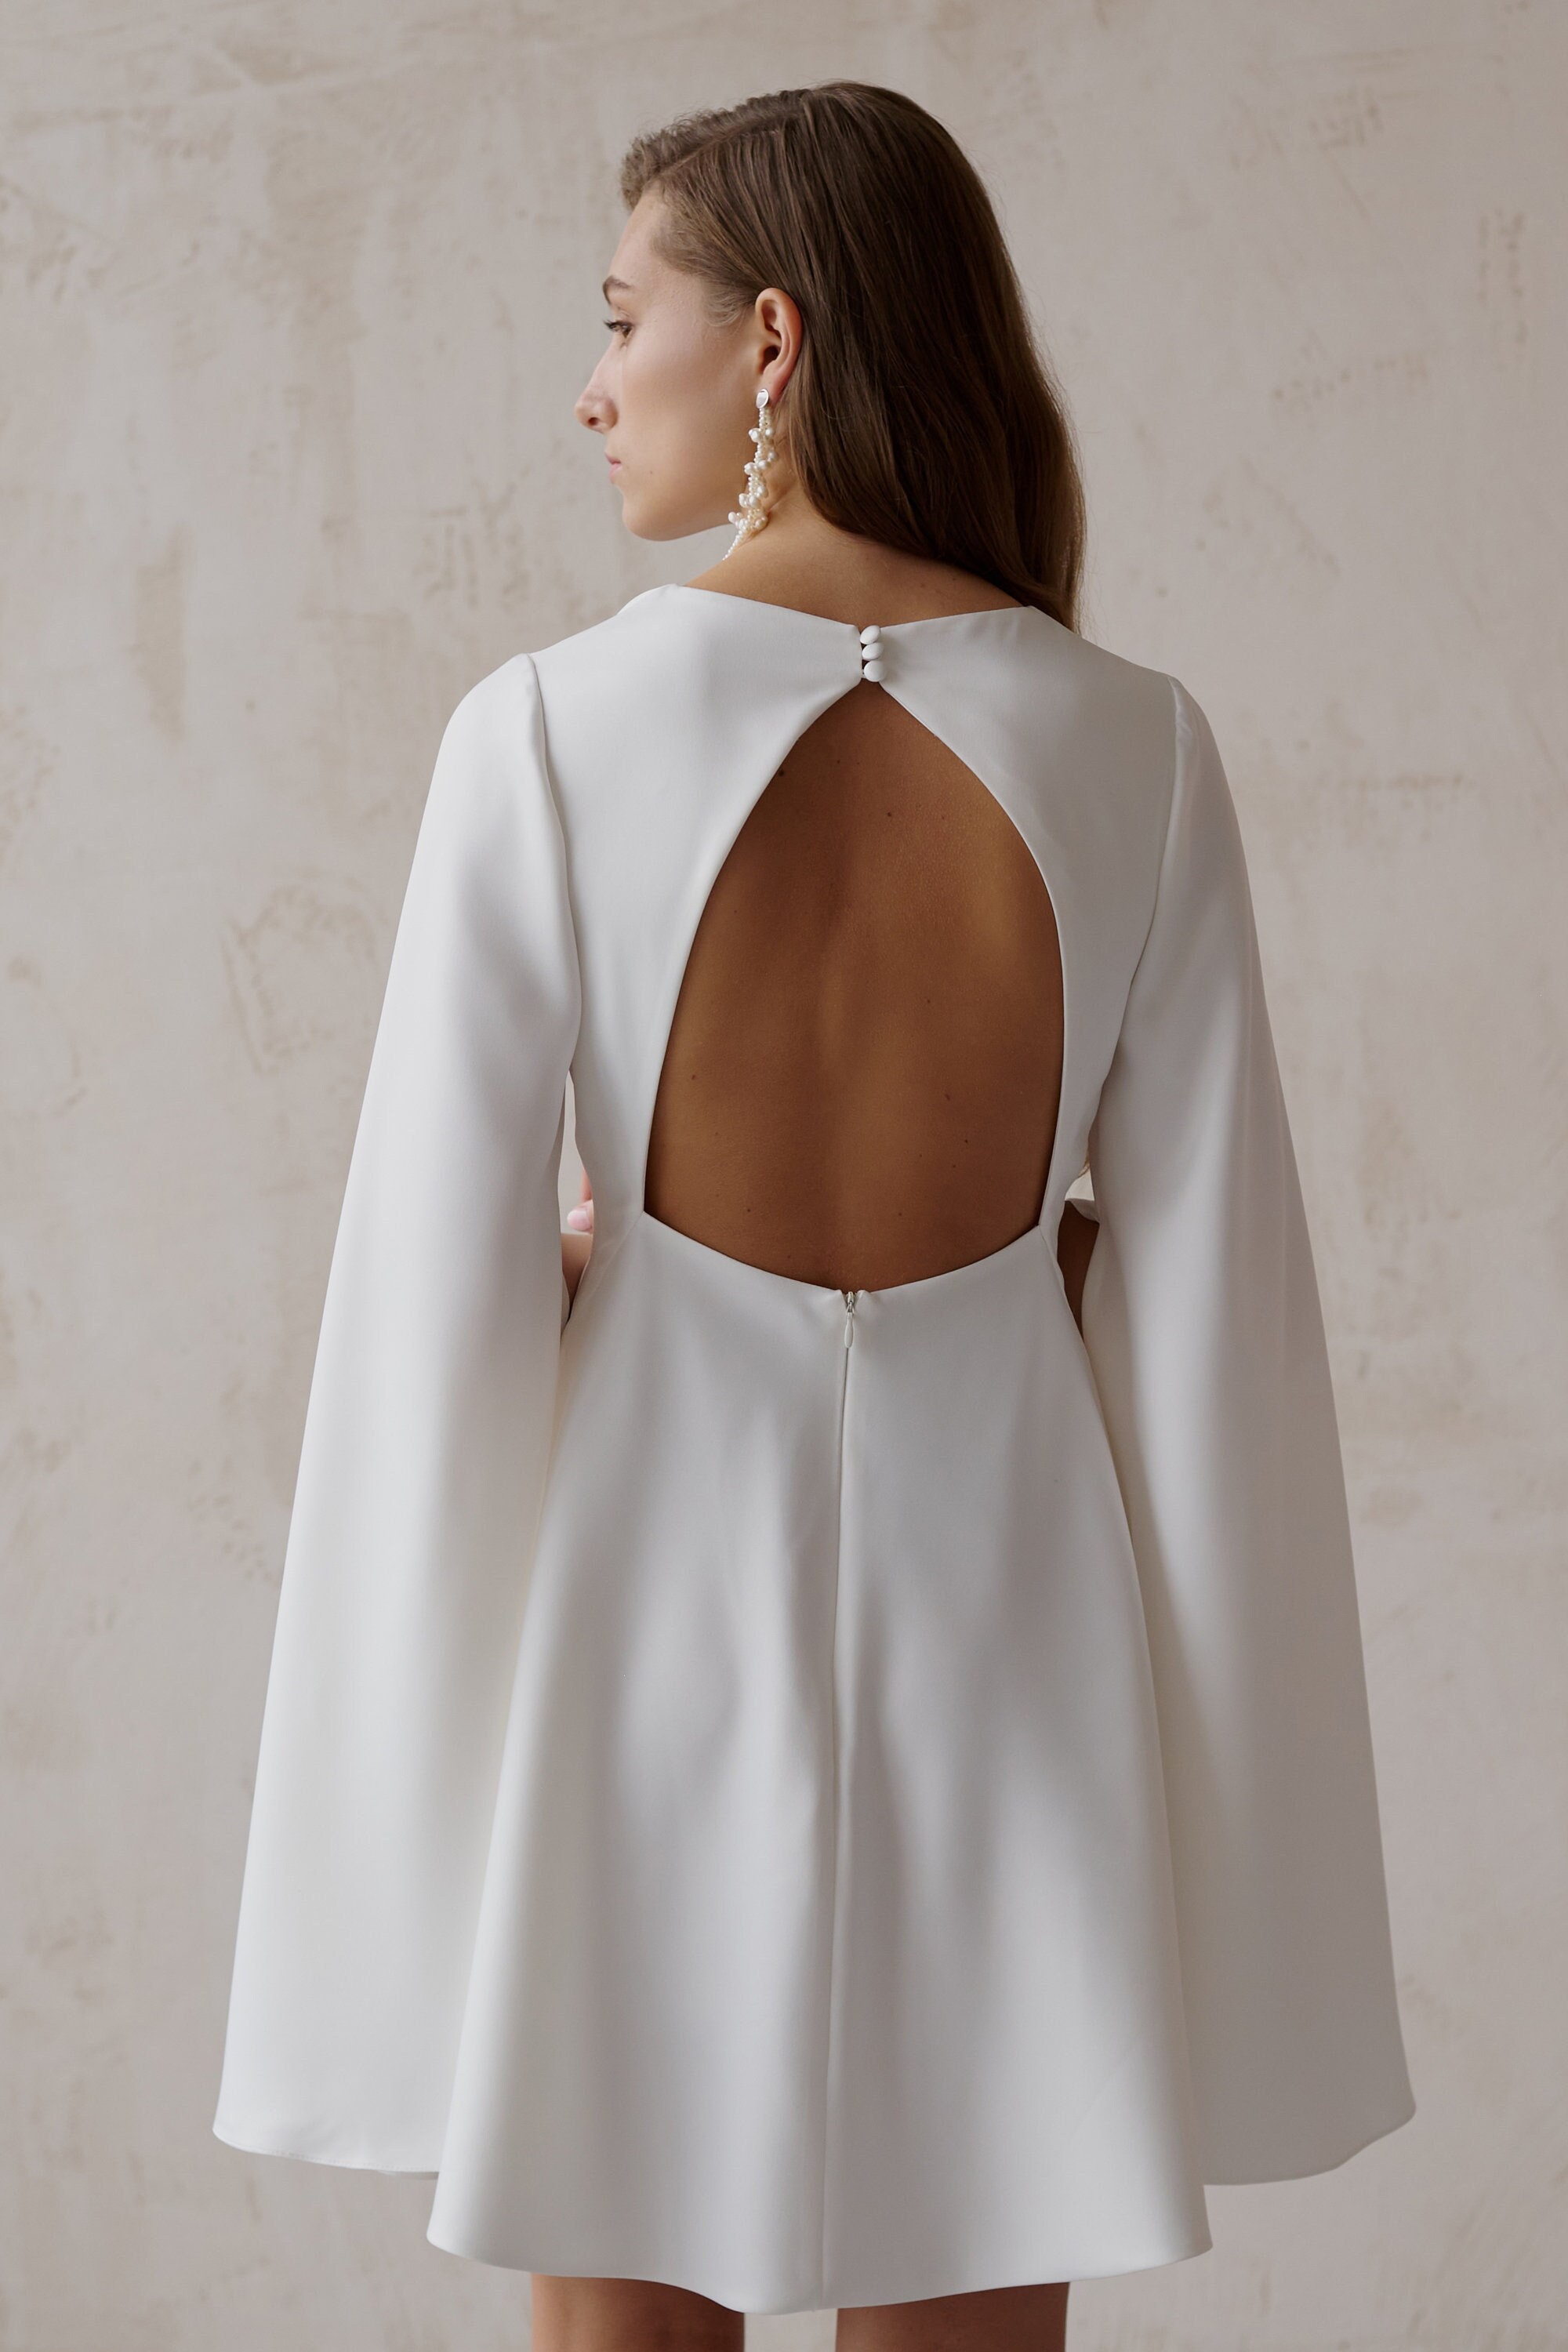 White Darla Keyhole Bodysuit  Bodysuit, Jersey fabric, Long sleeve